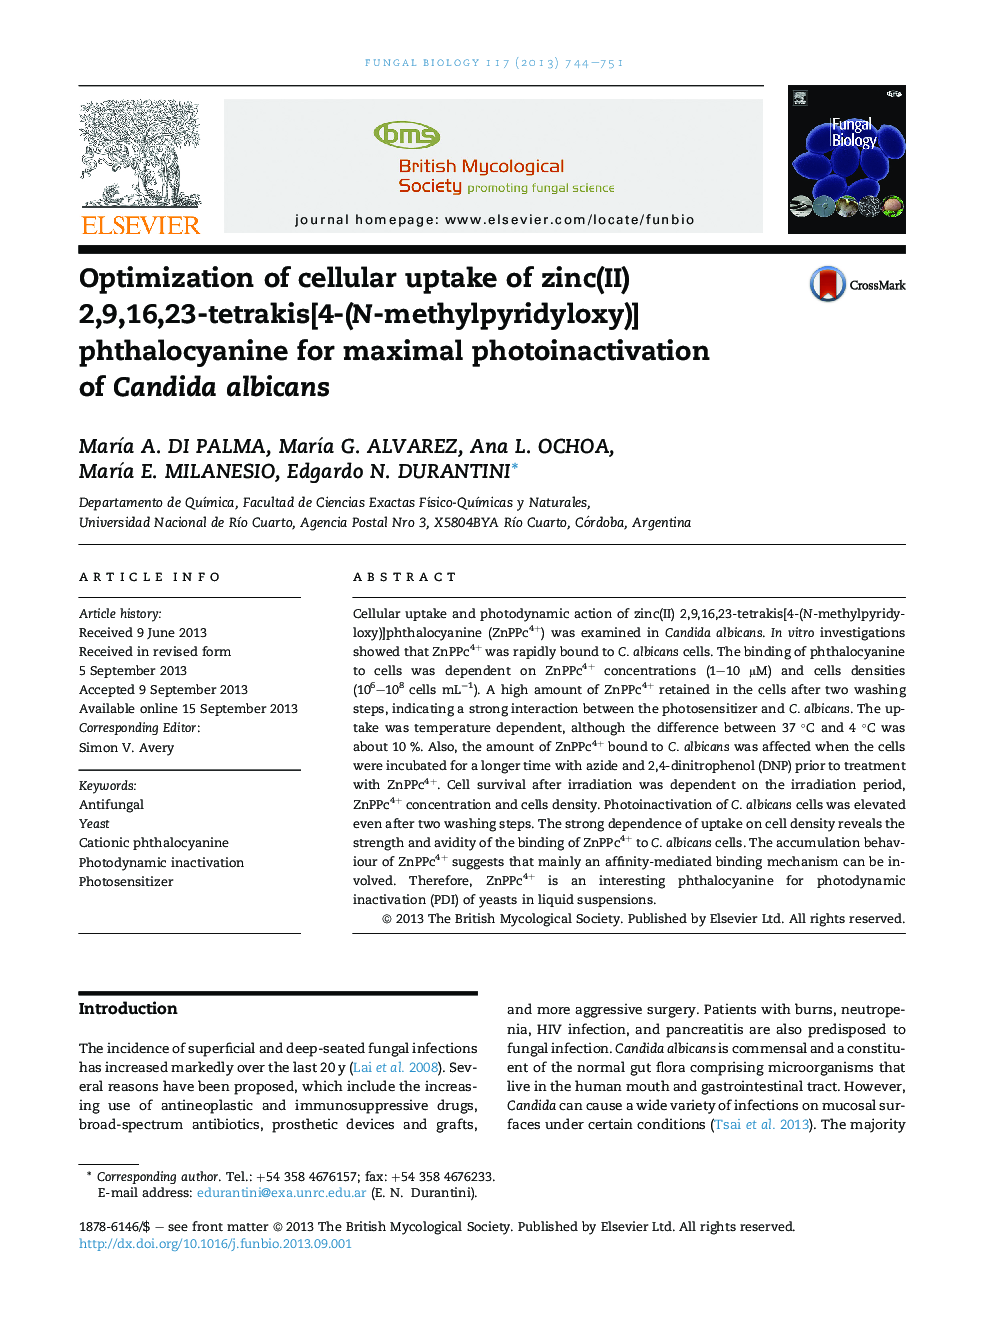 Optimization of cellular uptake of zinc(II) 2,9,16,23-tetrakis[4-(N-methylpyridyloxy)]phthalocyanine for maximal photoinactivation of Candida albicans